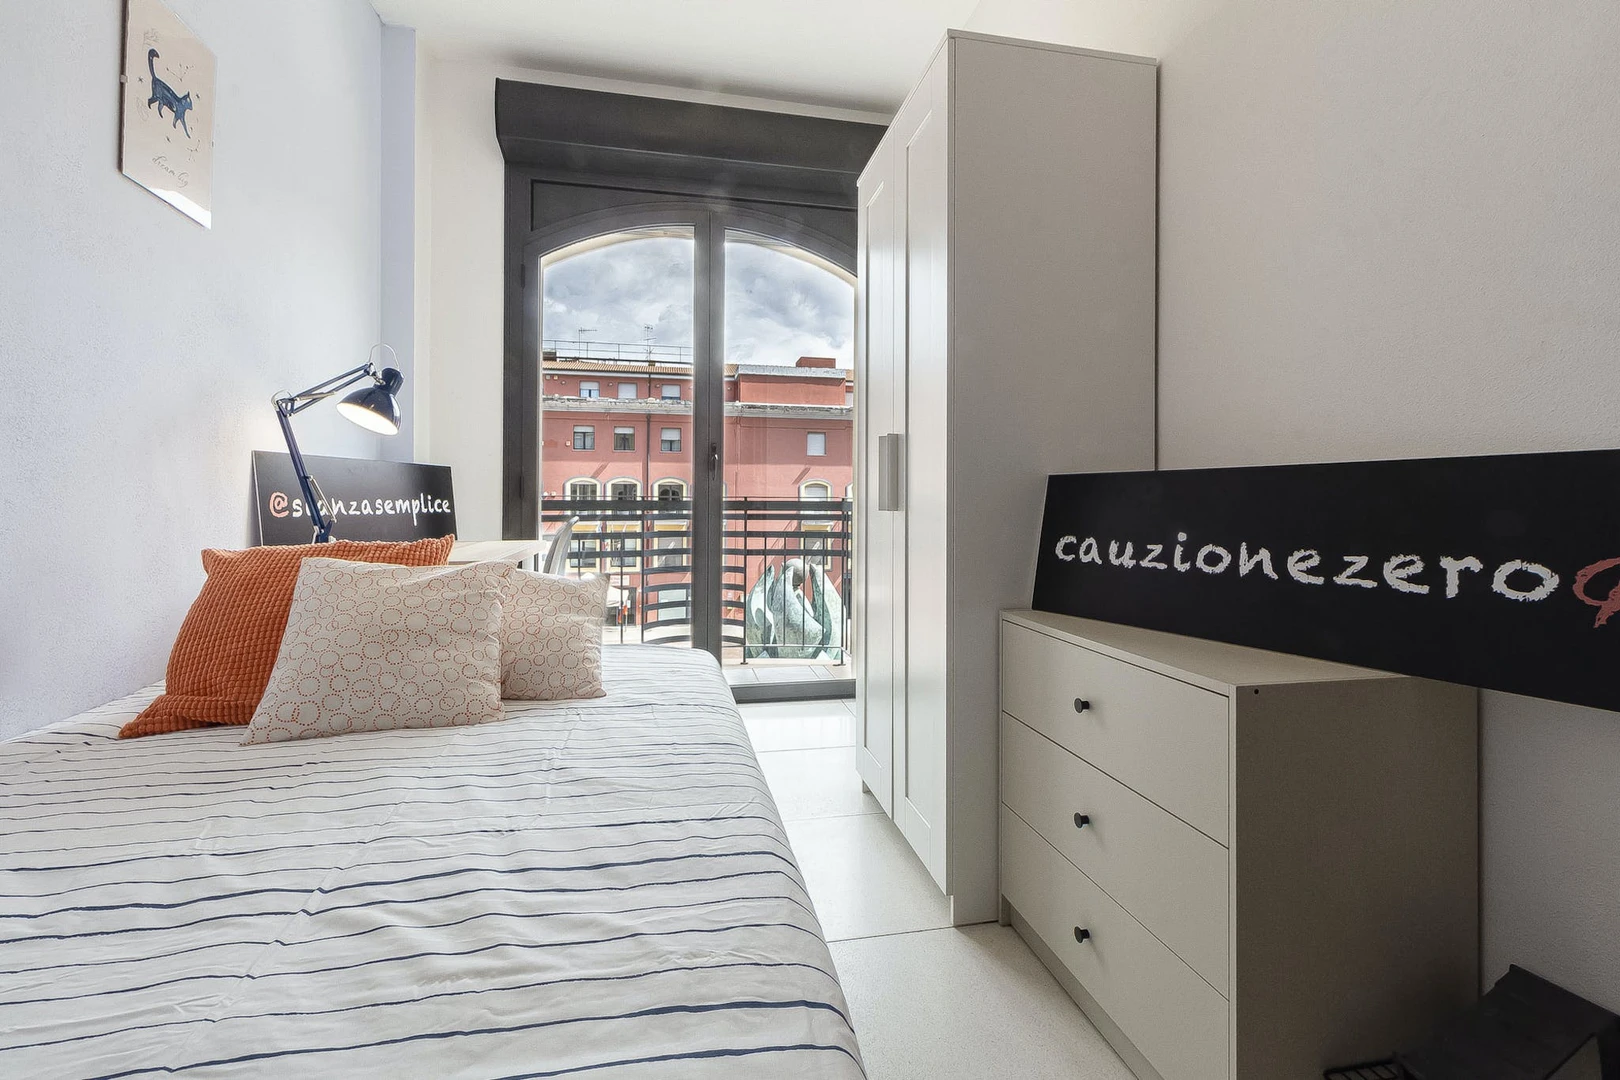 Habitación en alquiler con cama doble Sassari